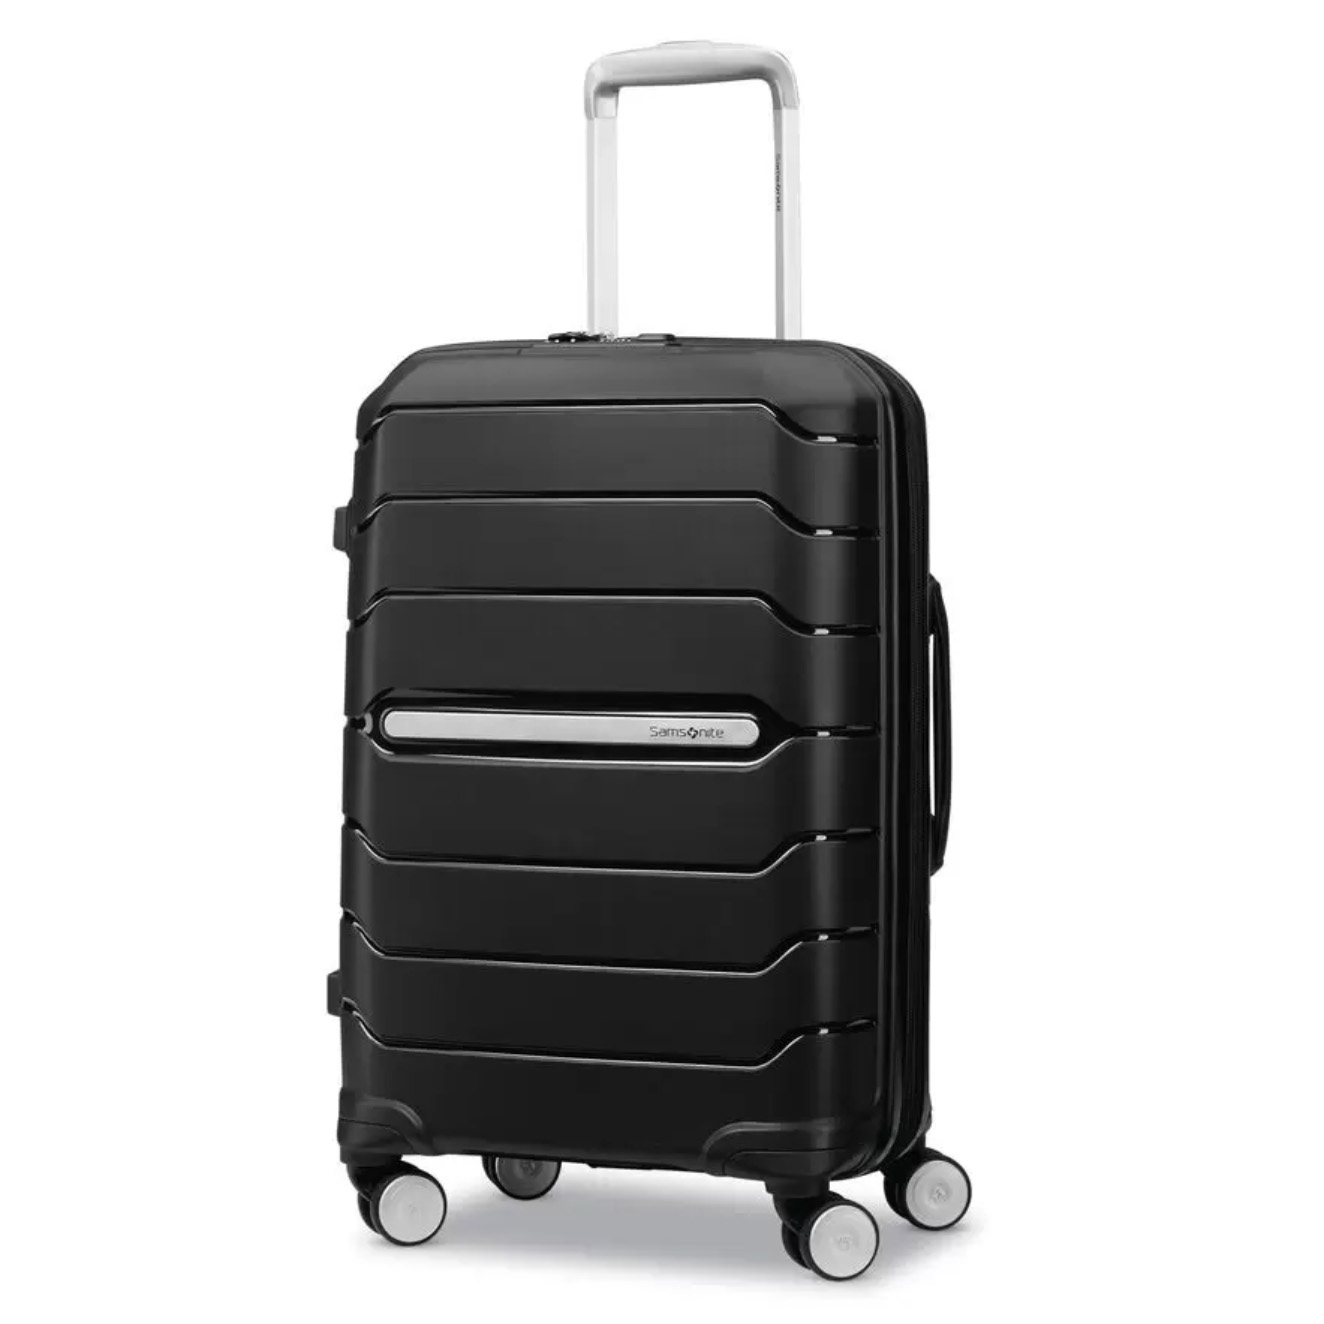 Black freeform Samsonite luggage